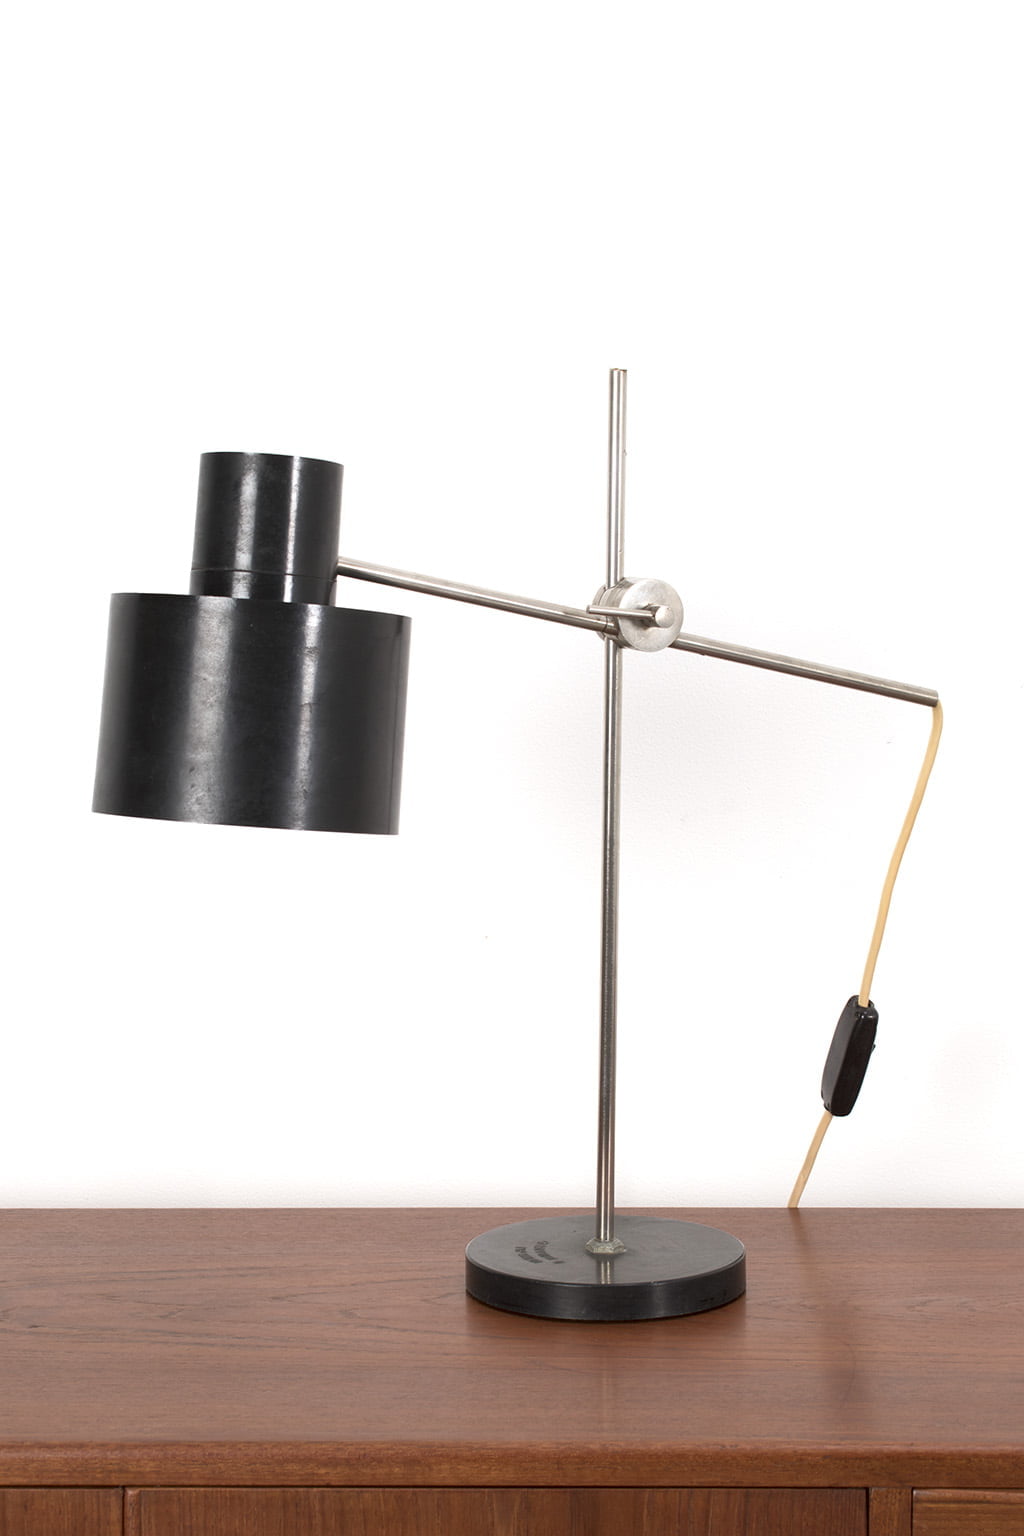 Electrosvit desk lamp